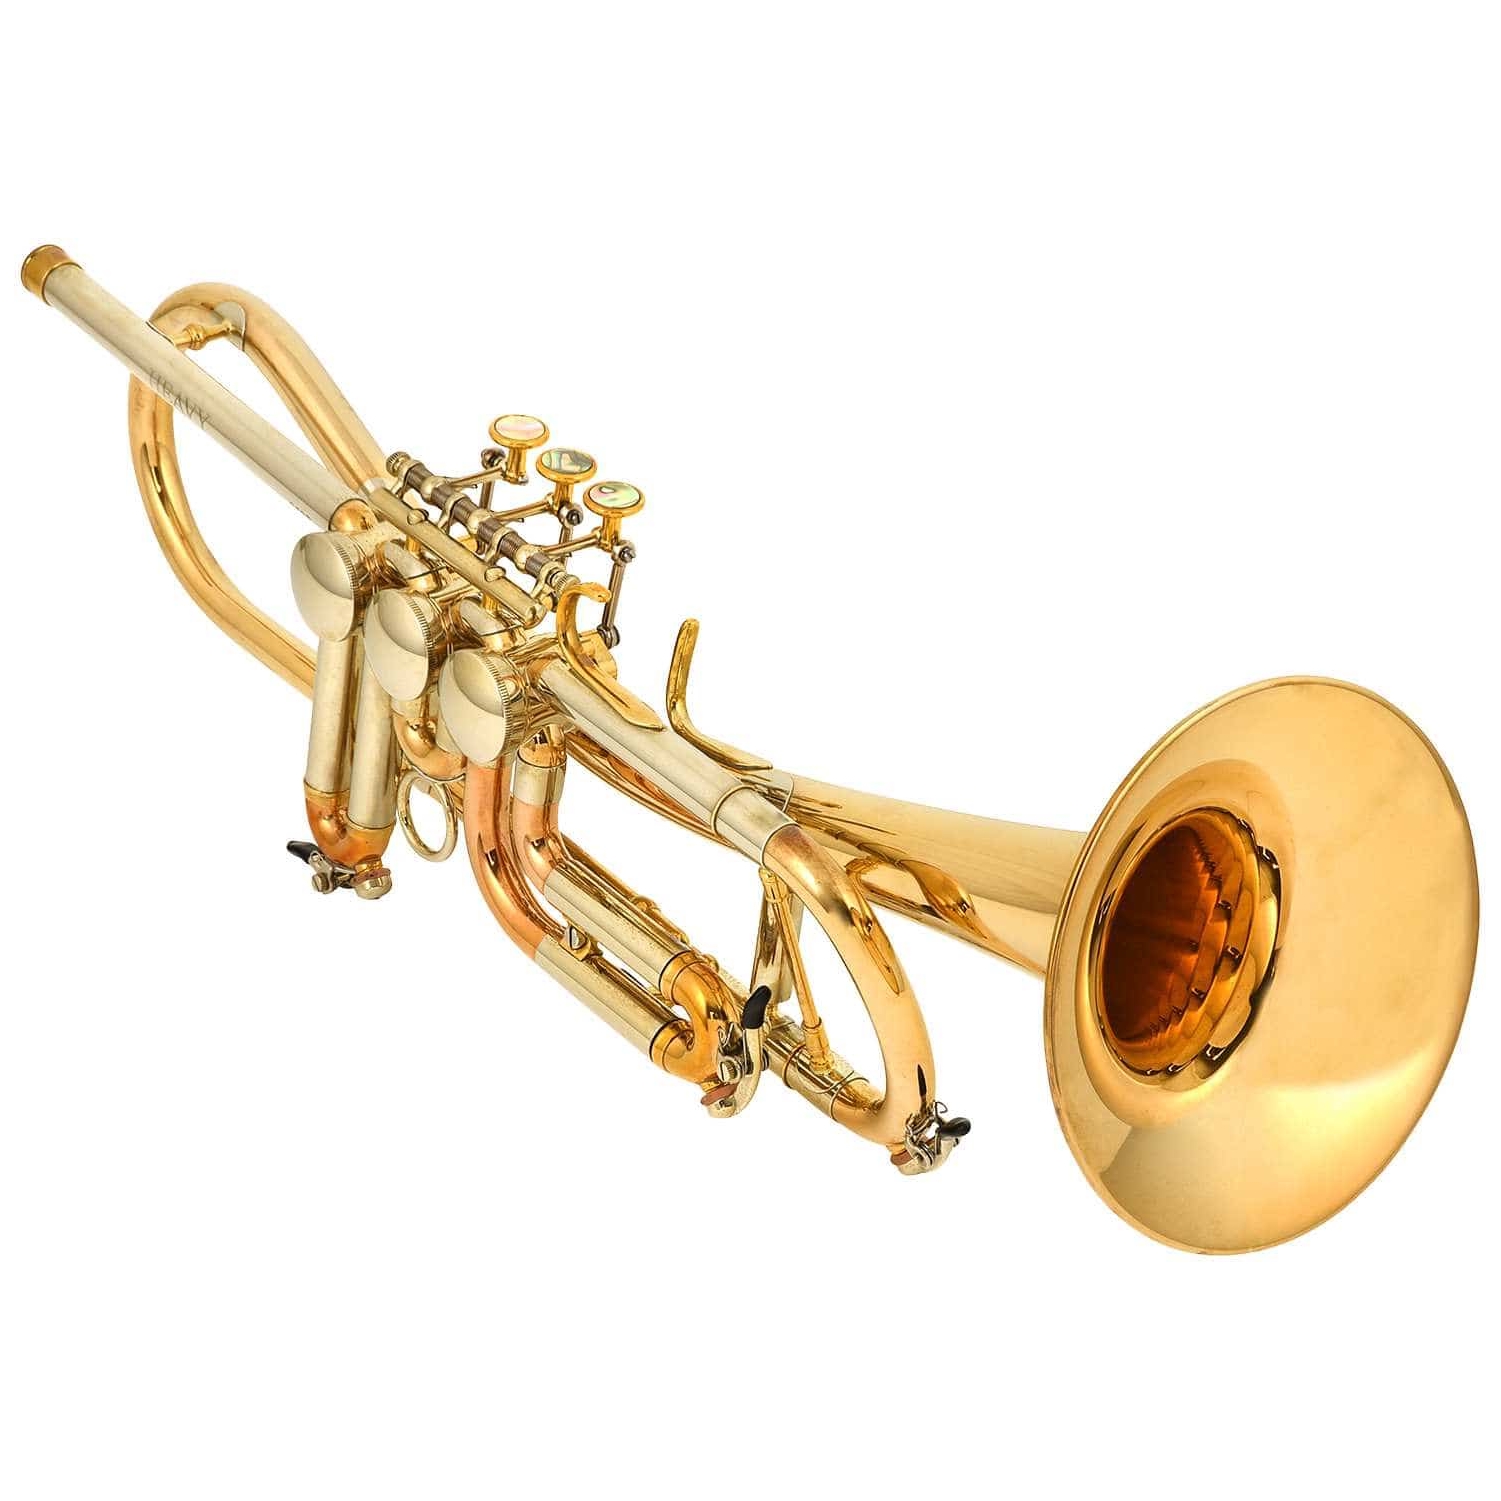 Schagerl Ganschhorn Heavy Bb-Trompete unlackiert